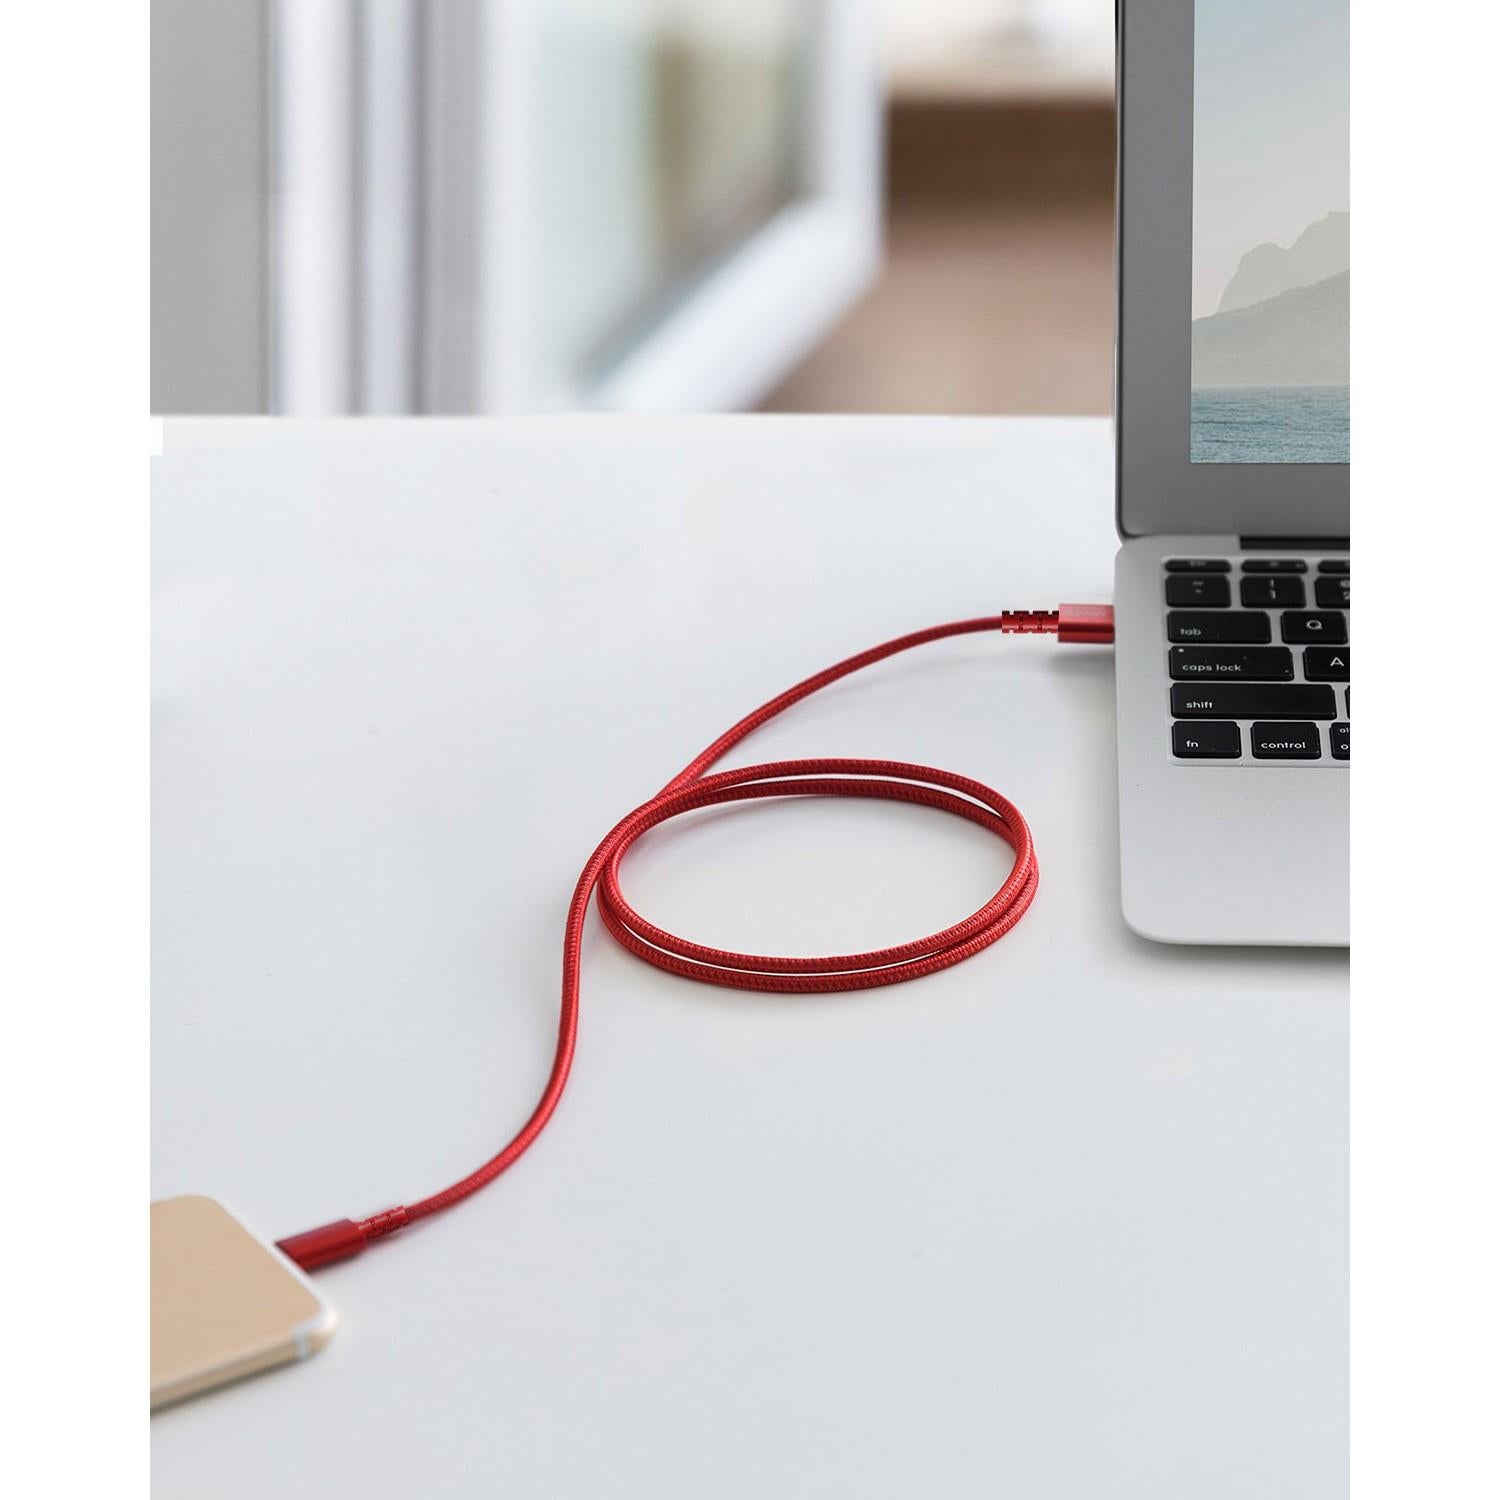 Anker PowerLine Select+ Apple Lightning 0.9 Meter USB Data/Charging Cable - Red - MFI Licensed